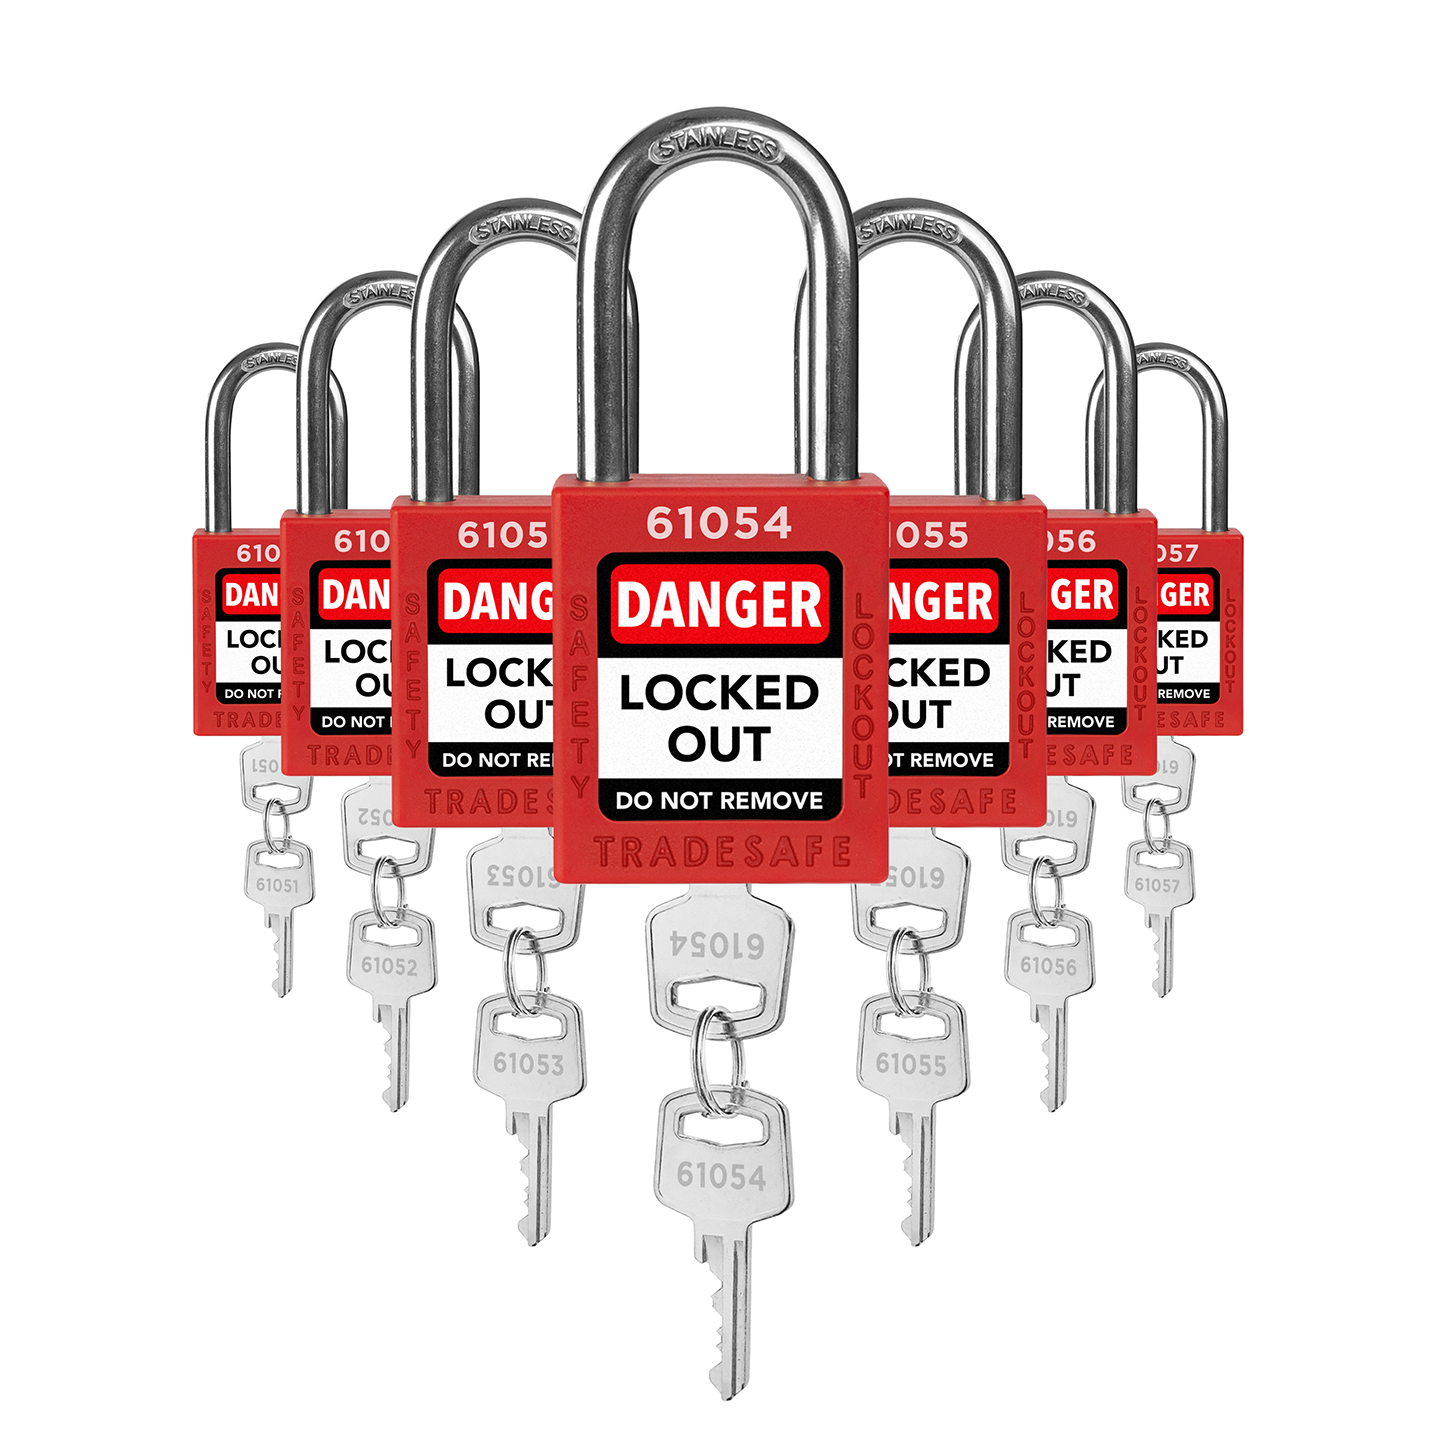 Candados con llaves diferentes - 7 candados rojos - 2 llaves por candado